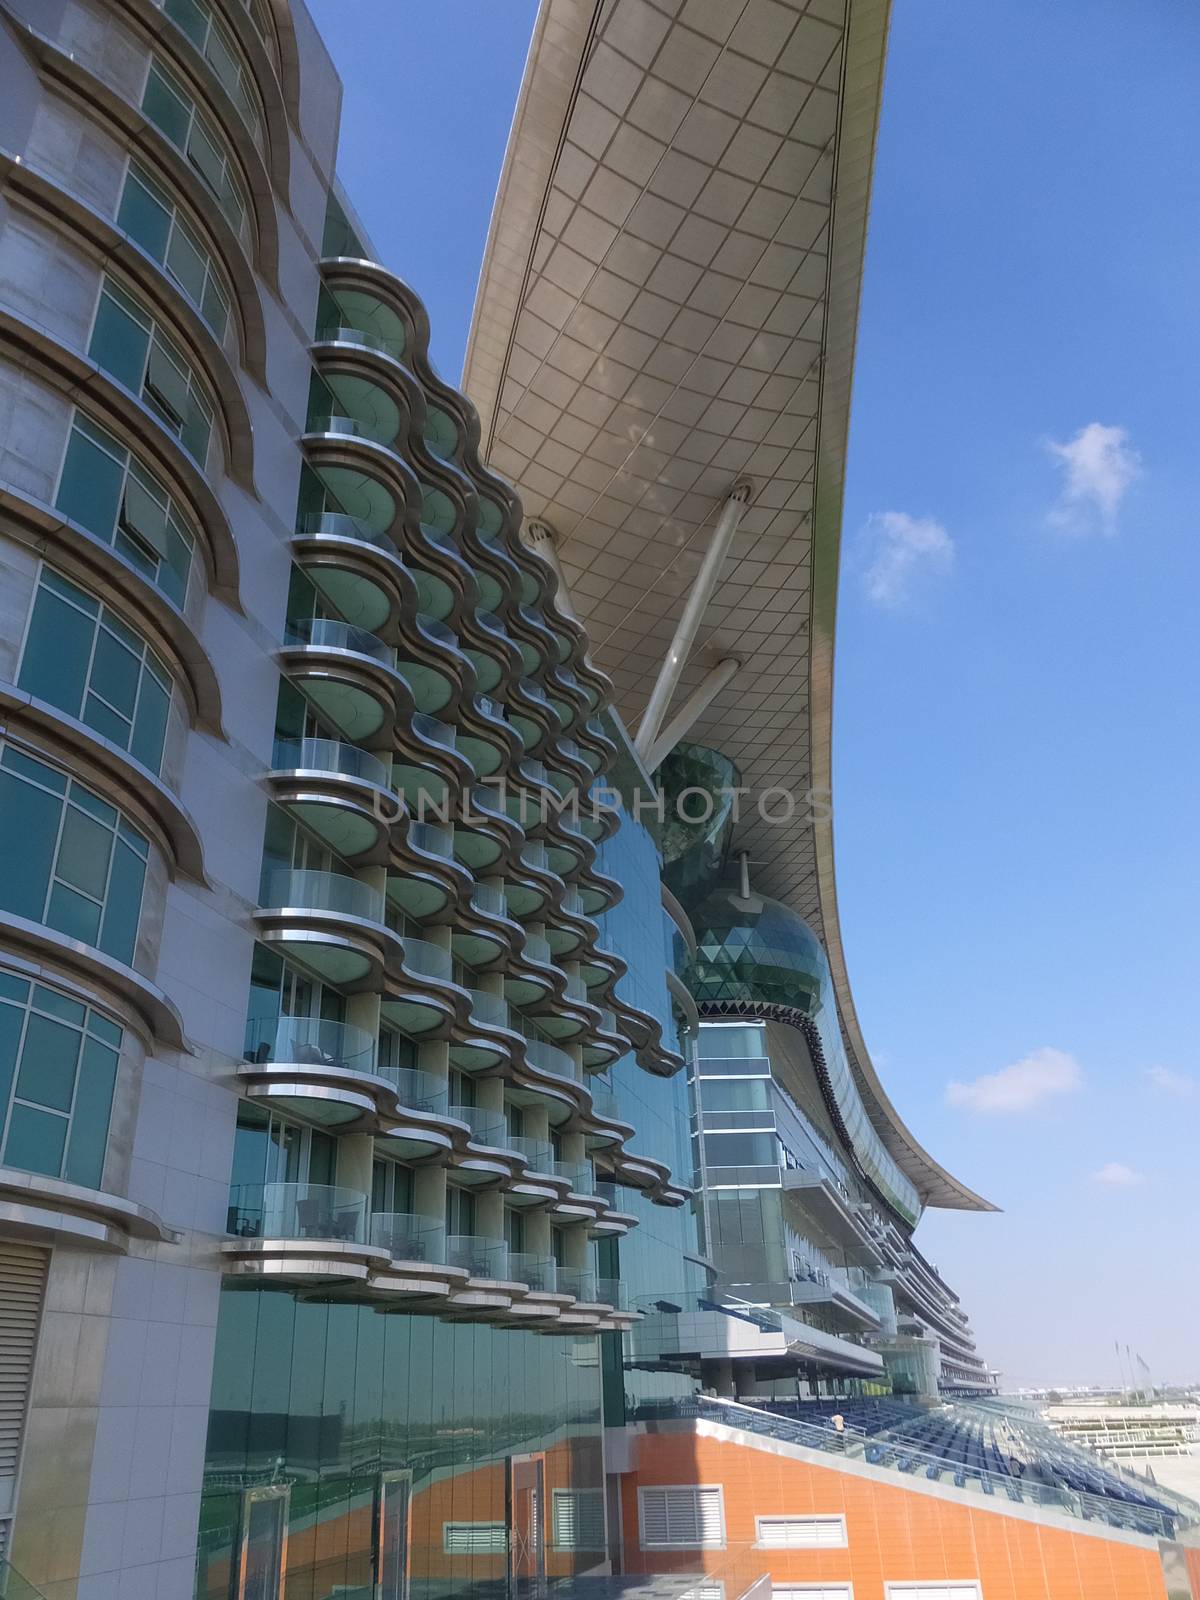 Meydan Hotel in Dubai, UAE by sainaniritu